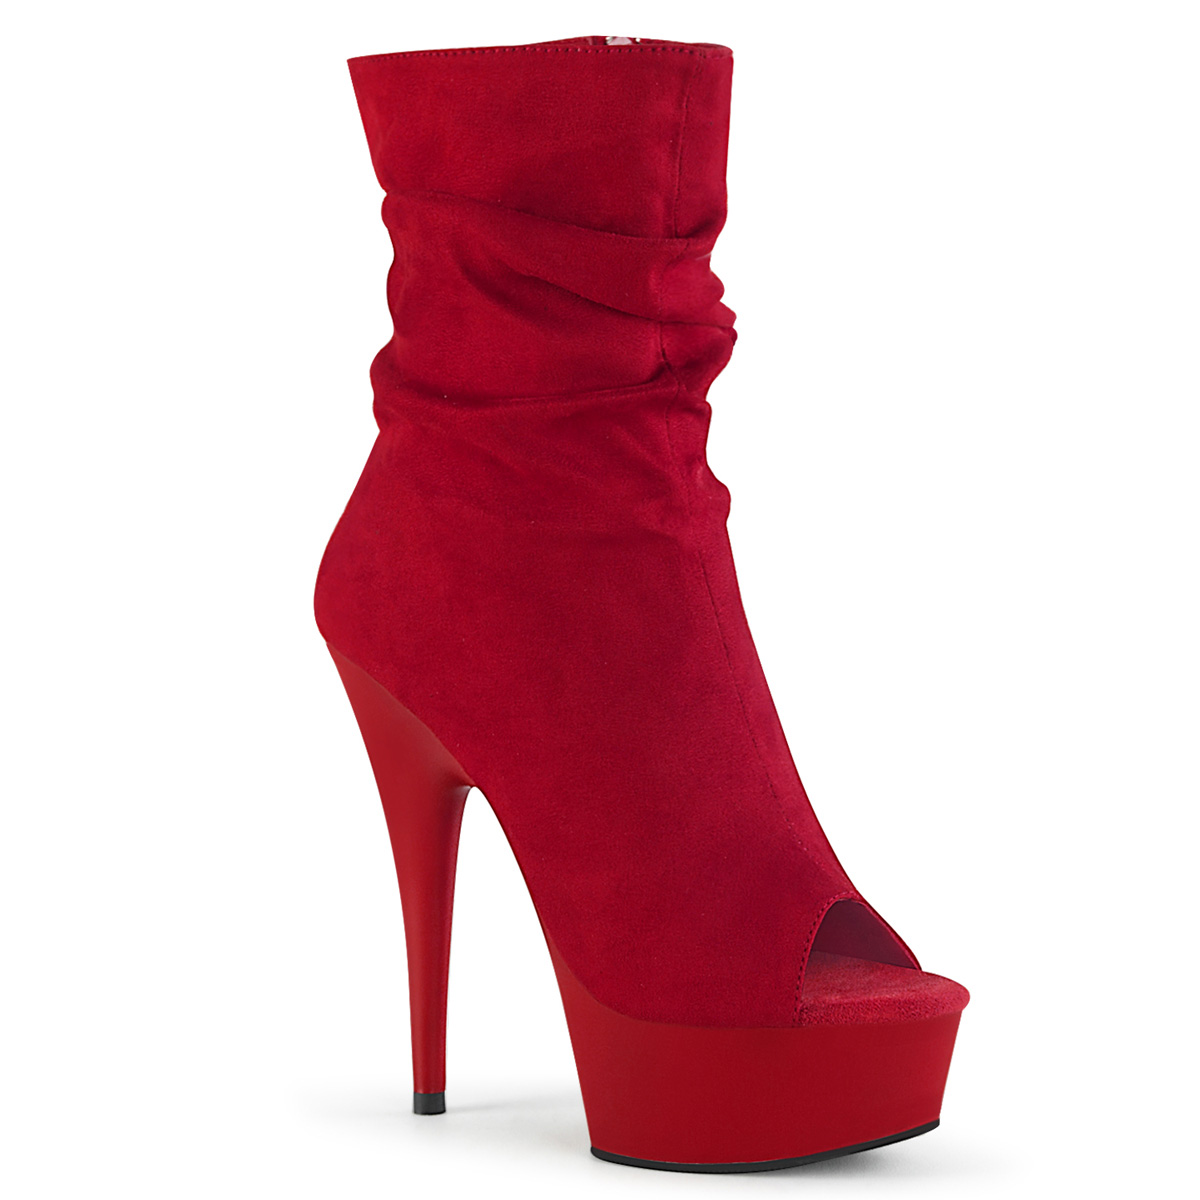 DELIGHT-1031 Pleaser high heels crash-look platform peep toe ankle ...